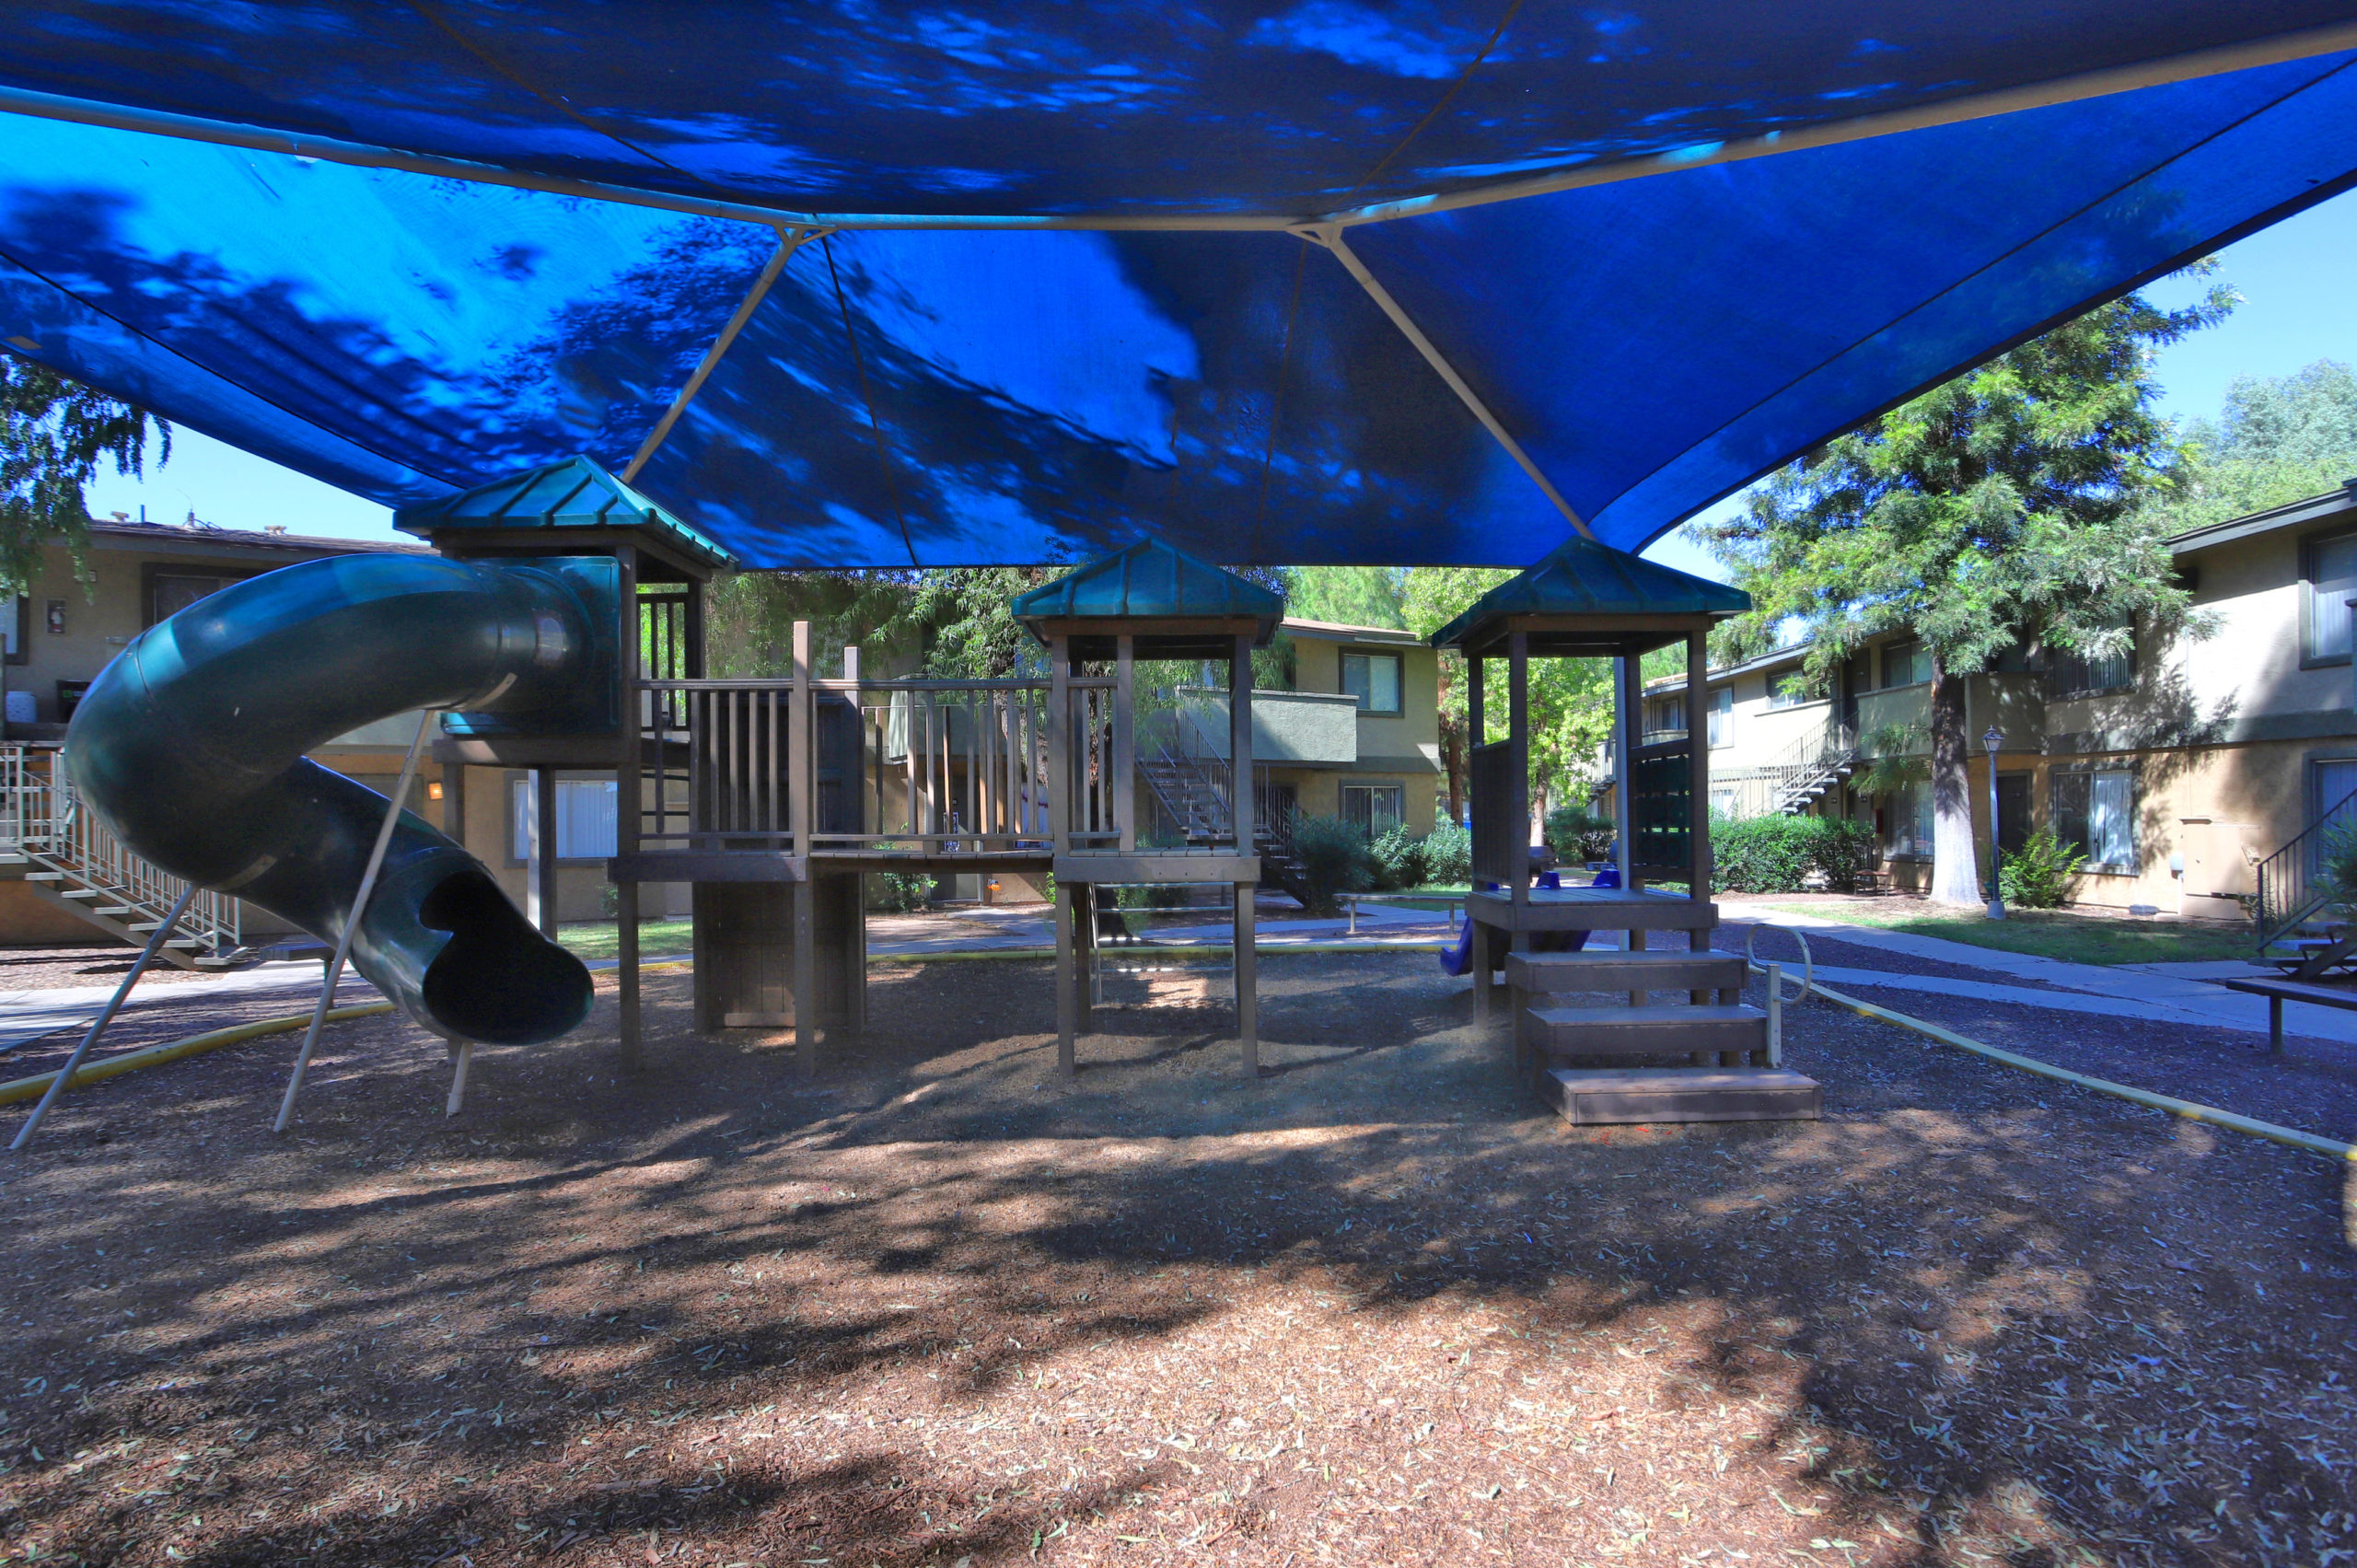 sienna ridge playground community apartments tucson arizona